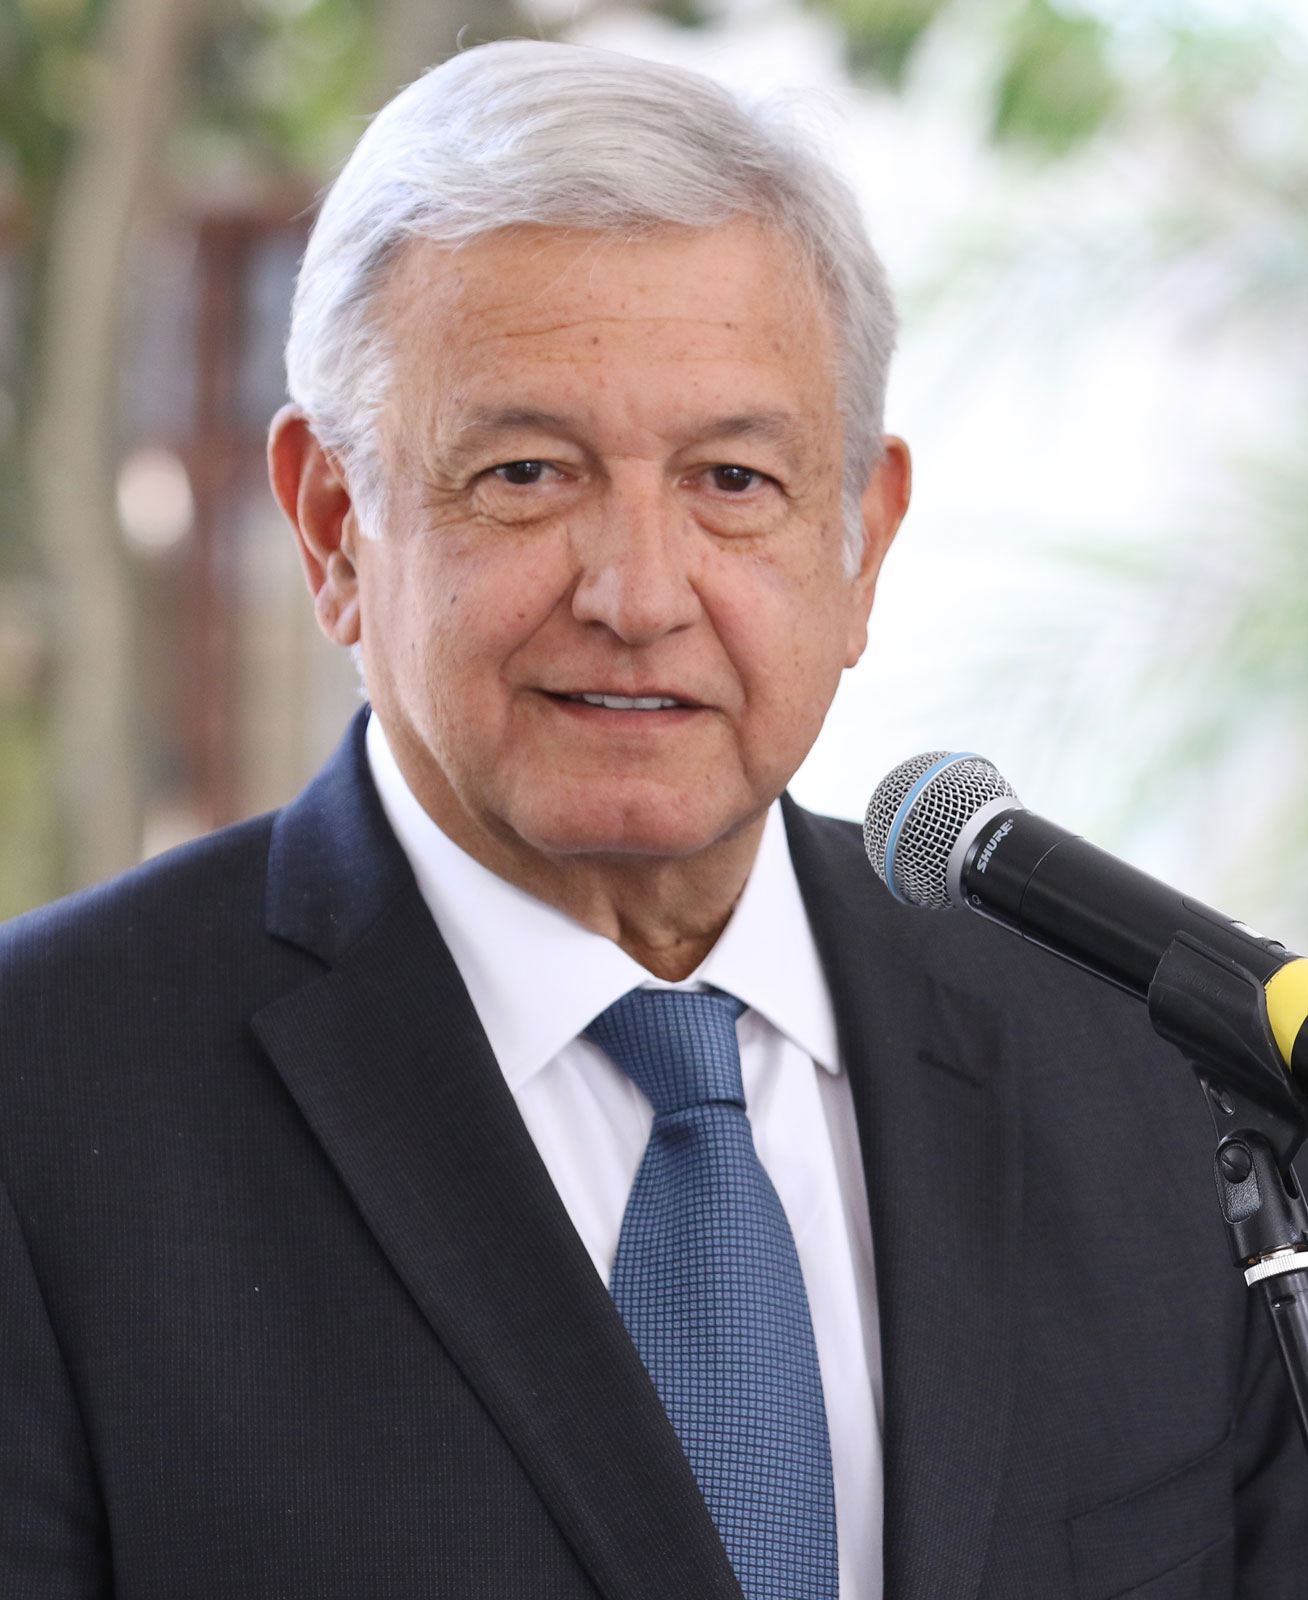 Presiden Mexico positif Covid-19 - Isu Semasa - Semasa - Forum - CARI ...